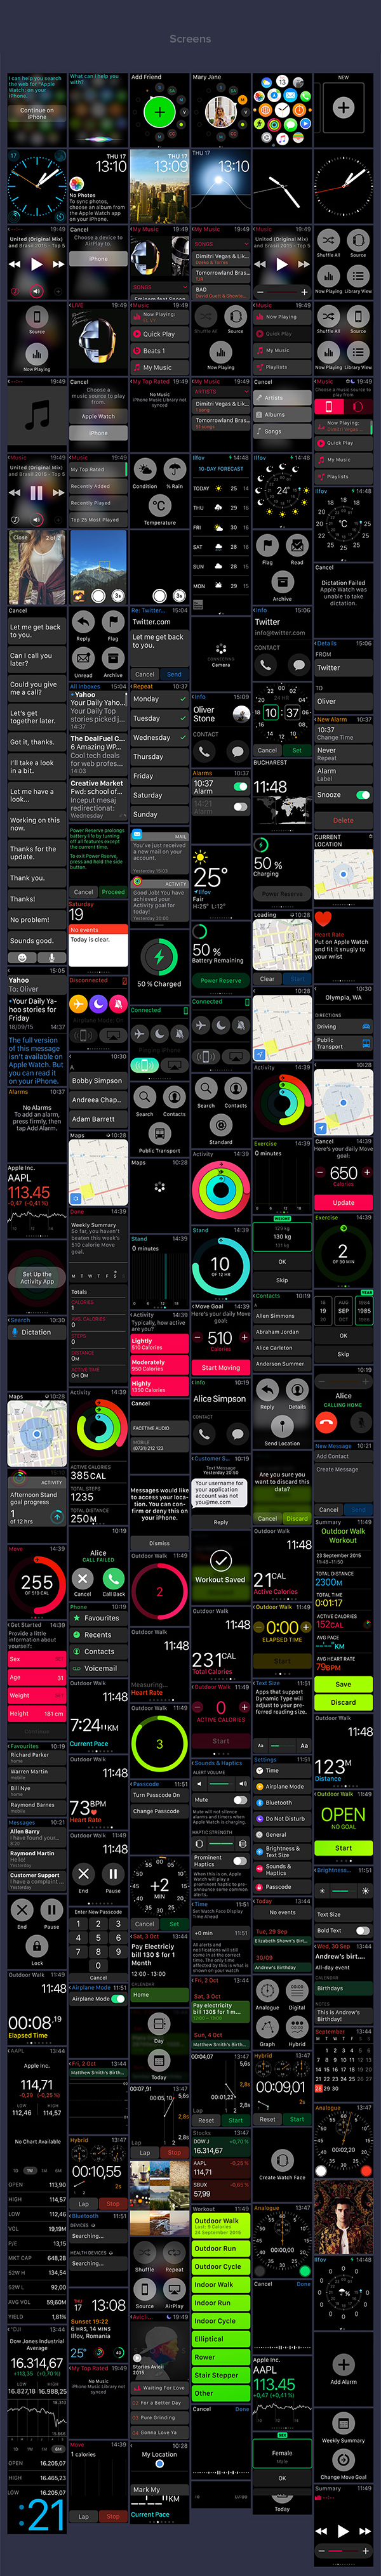 Apple WatchOS 2 Human Interface Complete UI Kit-Apple Watch Screens